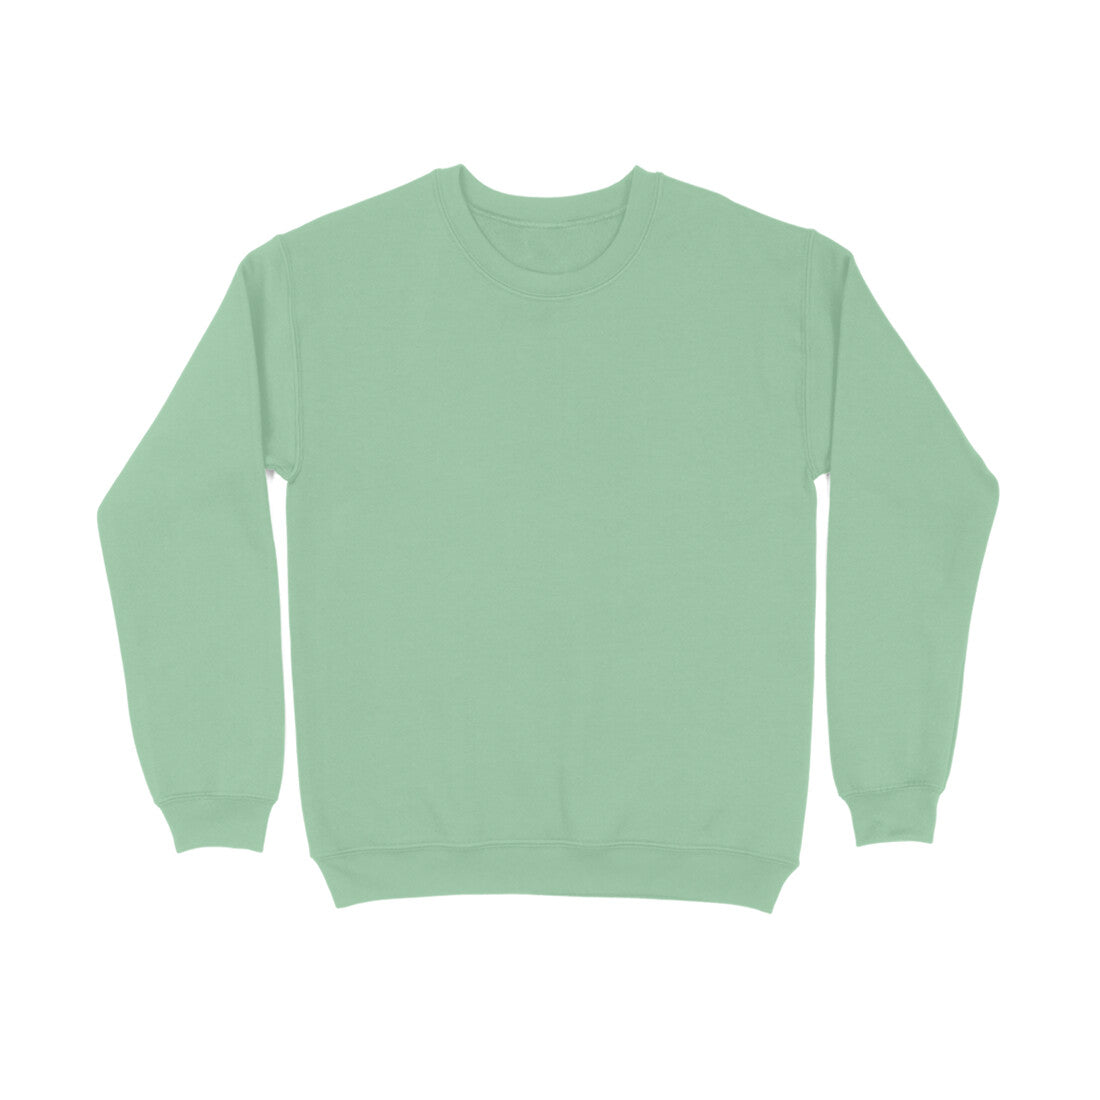 Bilkool Solid Cotton Sweatshirt